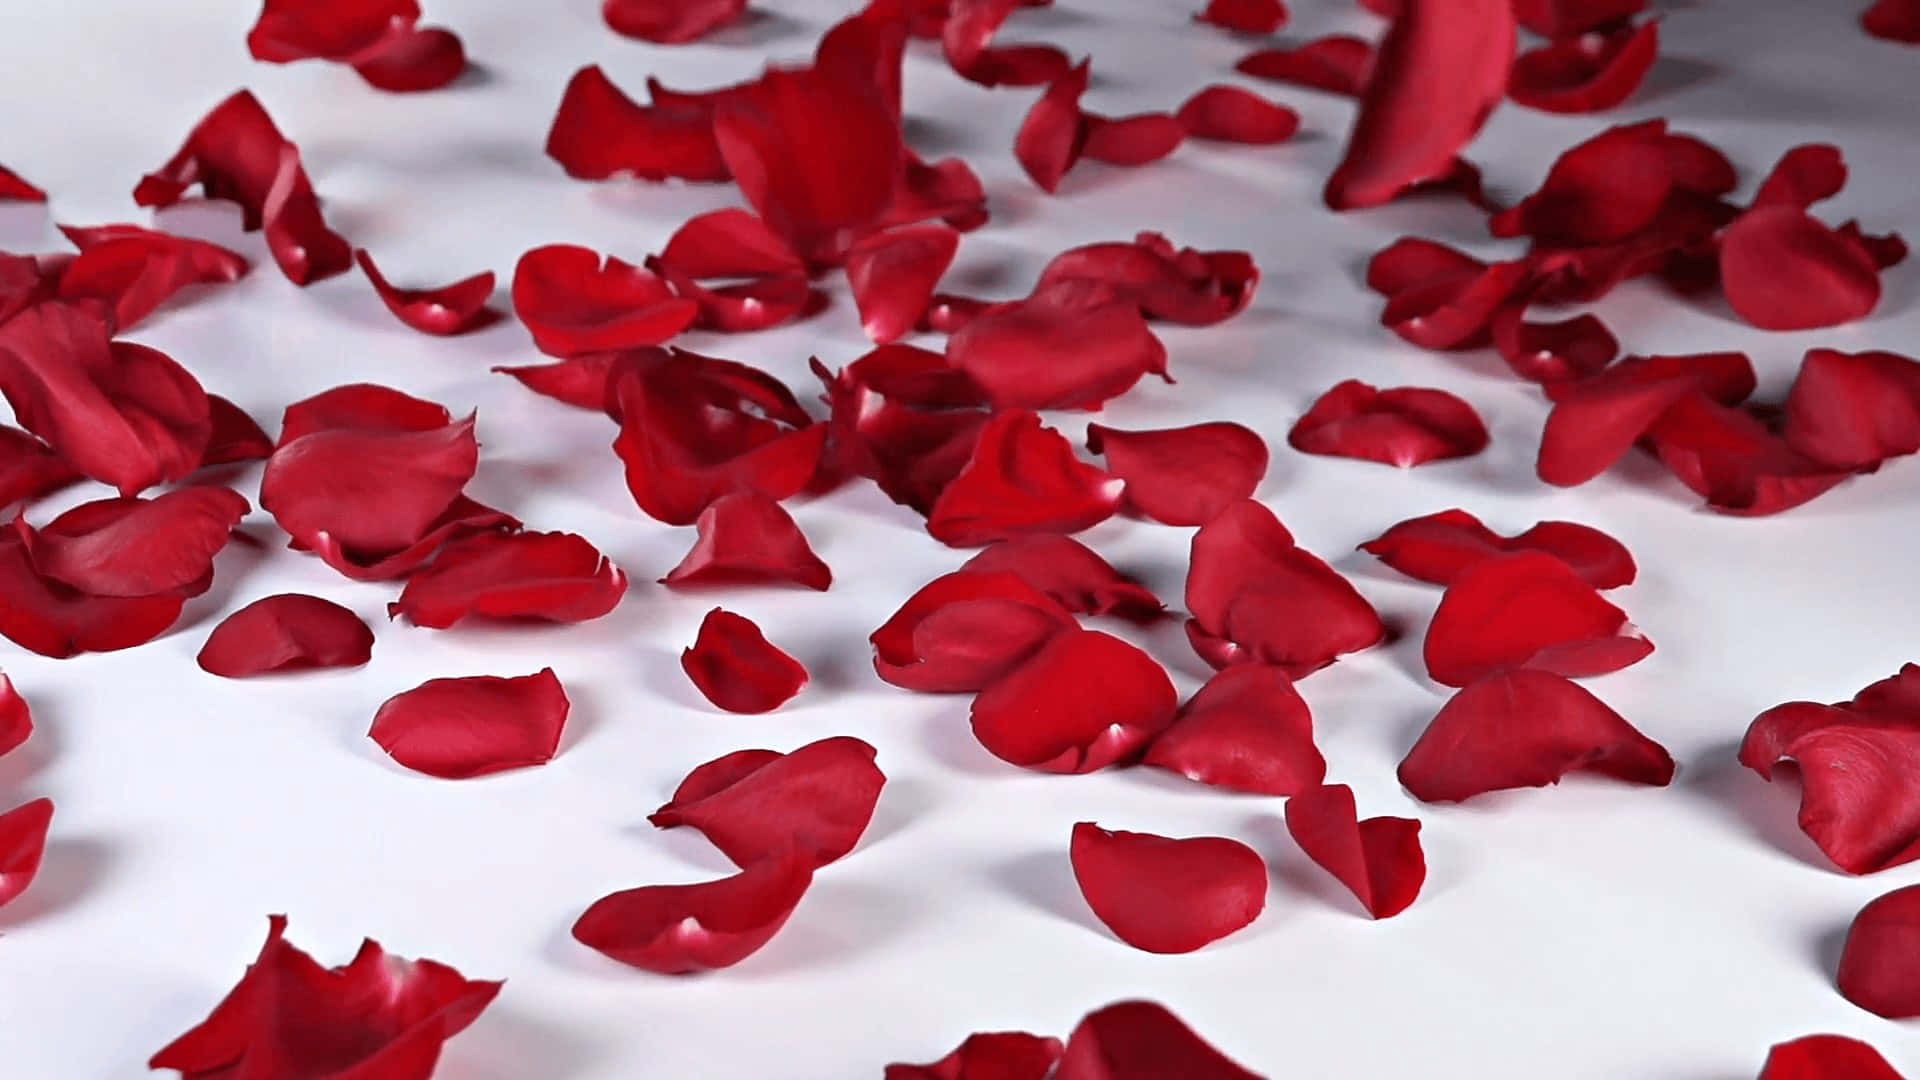 Captivating Red Rose Petal Close-up Wallpaper